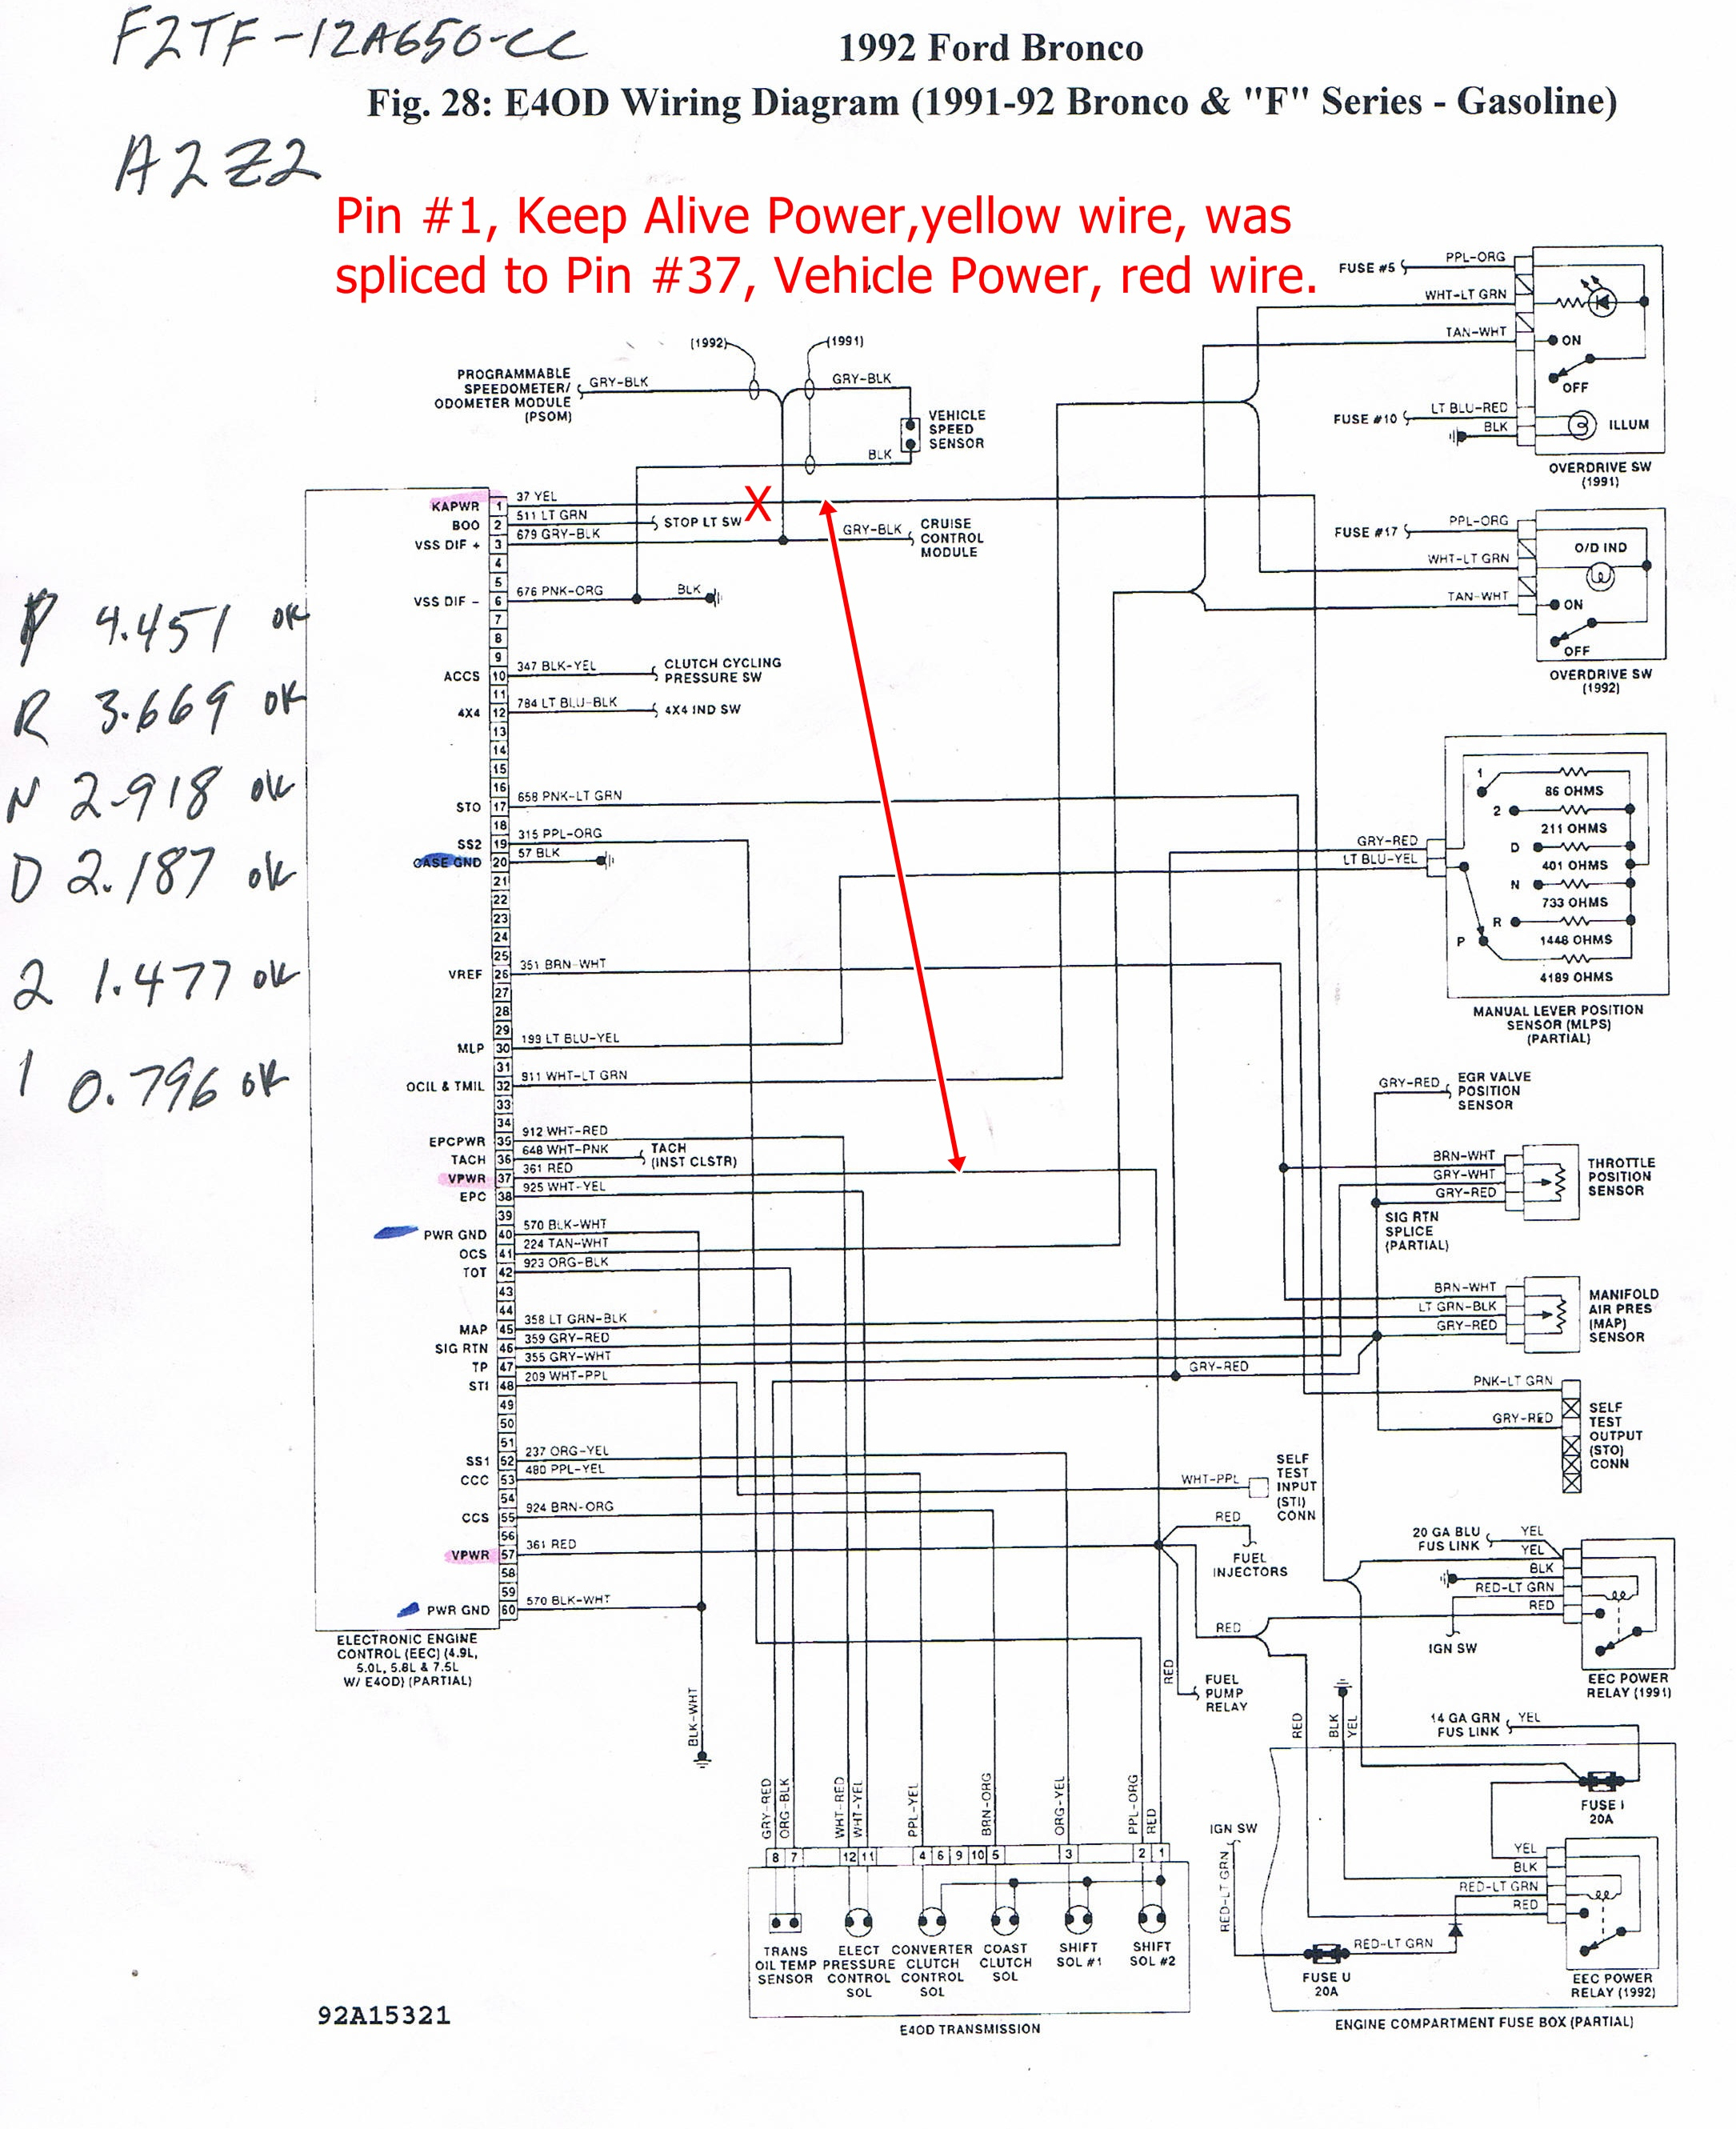 Lexus Rx300 Radio Wiring Diagram | Wiring Library - Harley Davidson Headlight Wiring Diagram